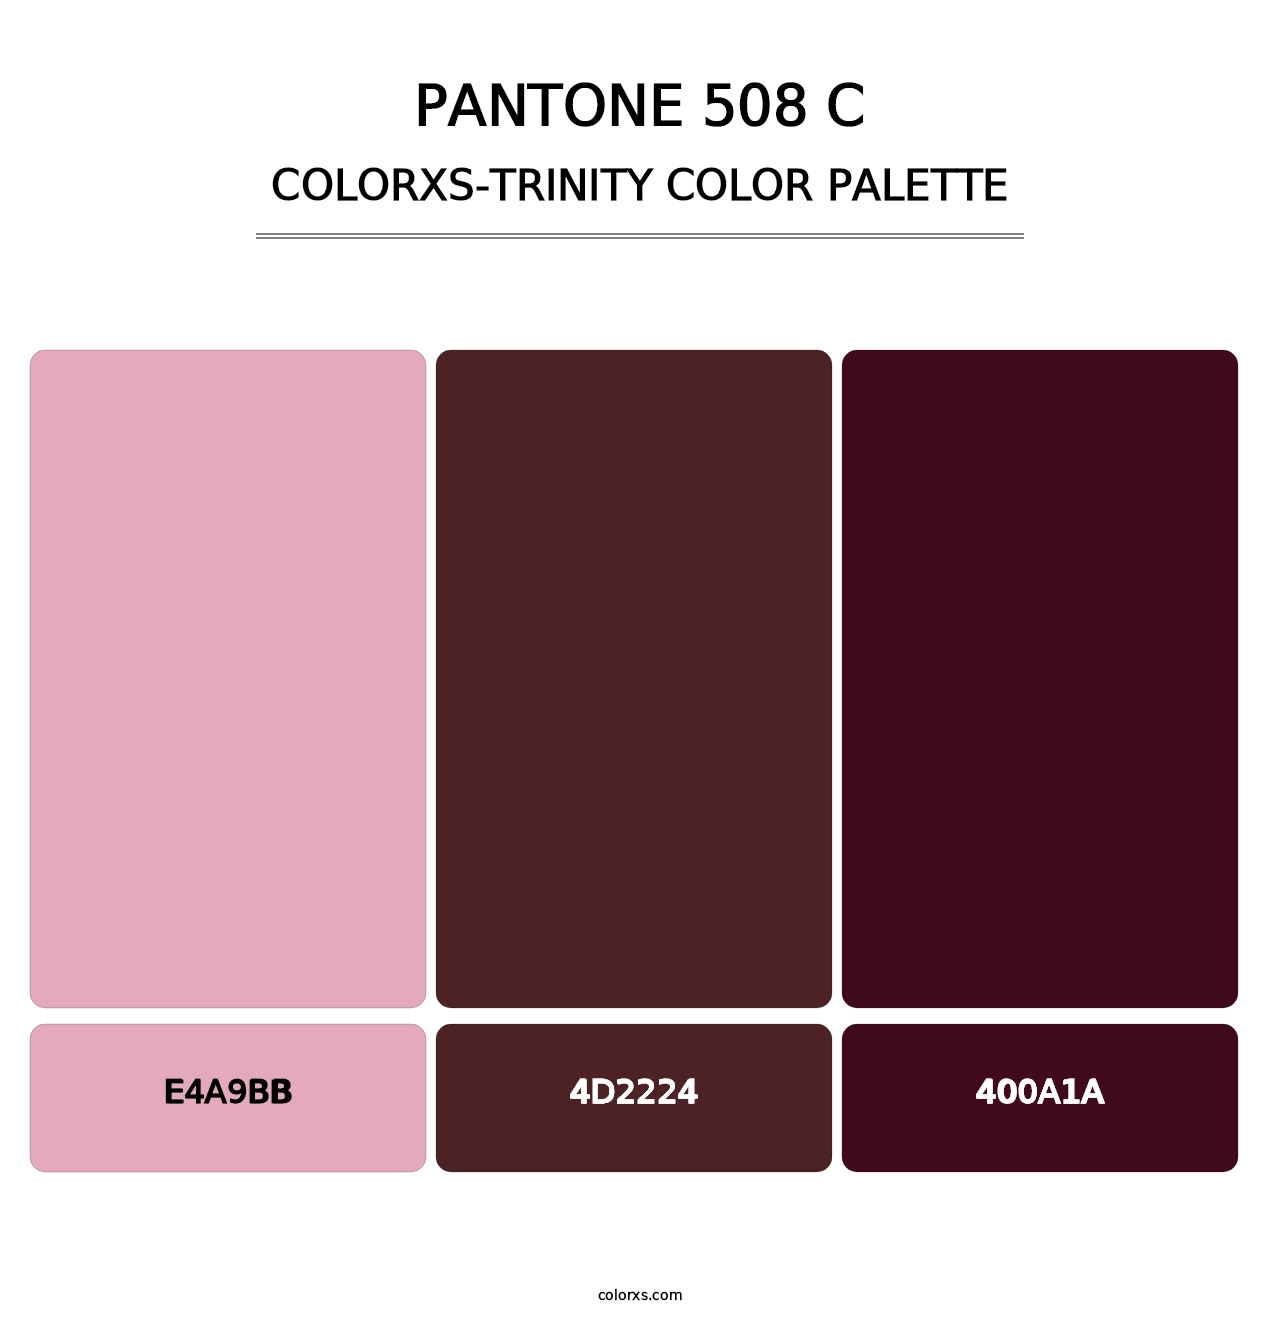 PANTONE 508 C - Colorxs Trinity Palette